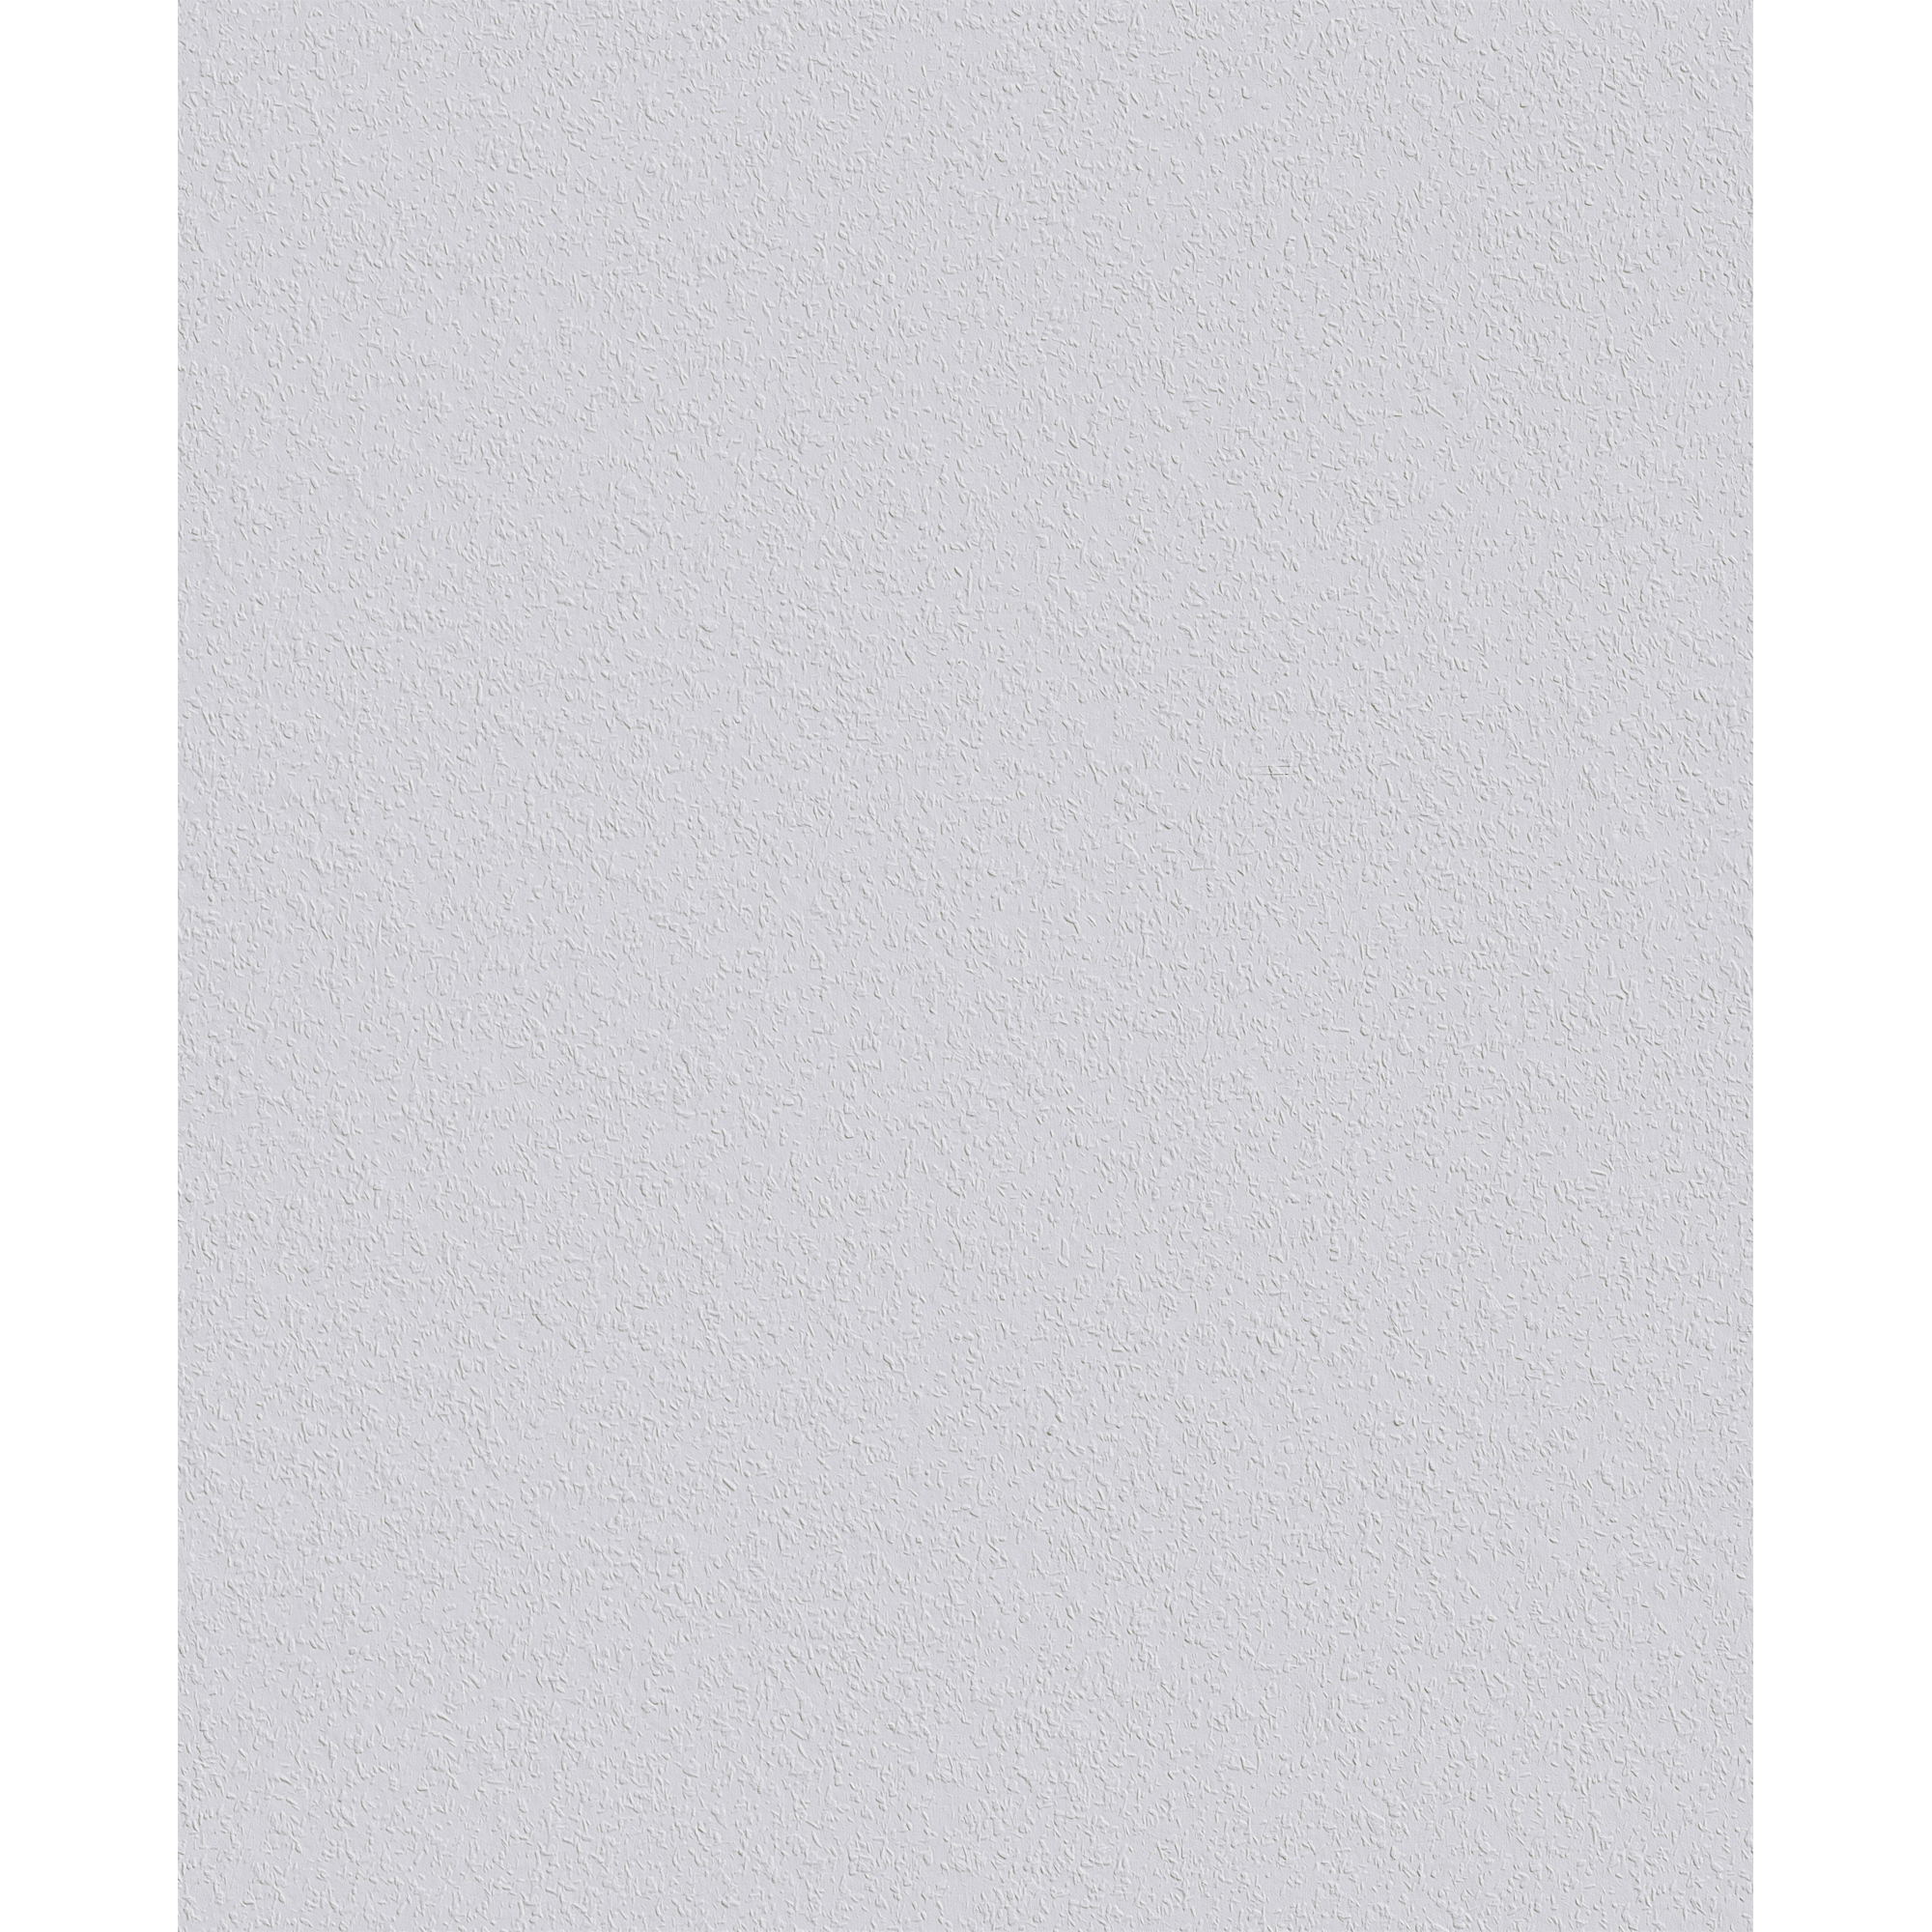 Vlies-Raufasertapete 'Elegance' weiß 0,53 x 15 m + product picture